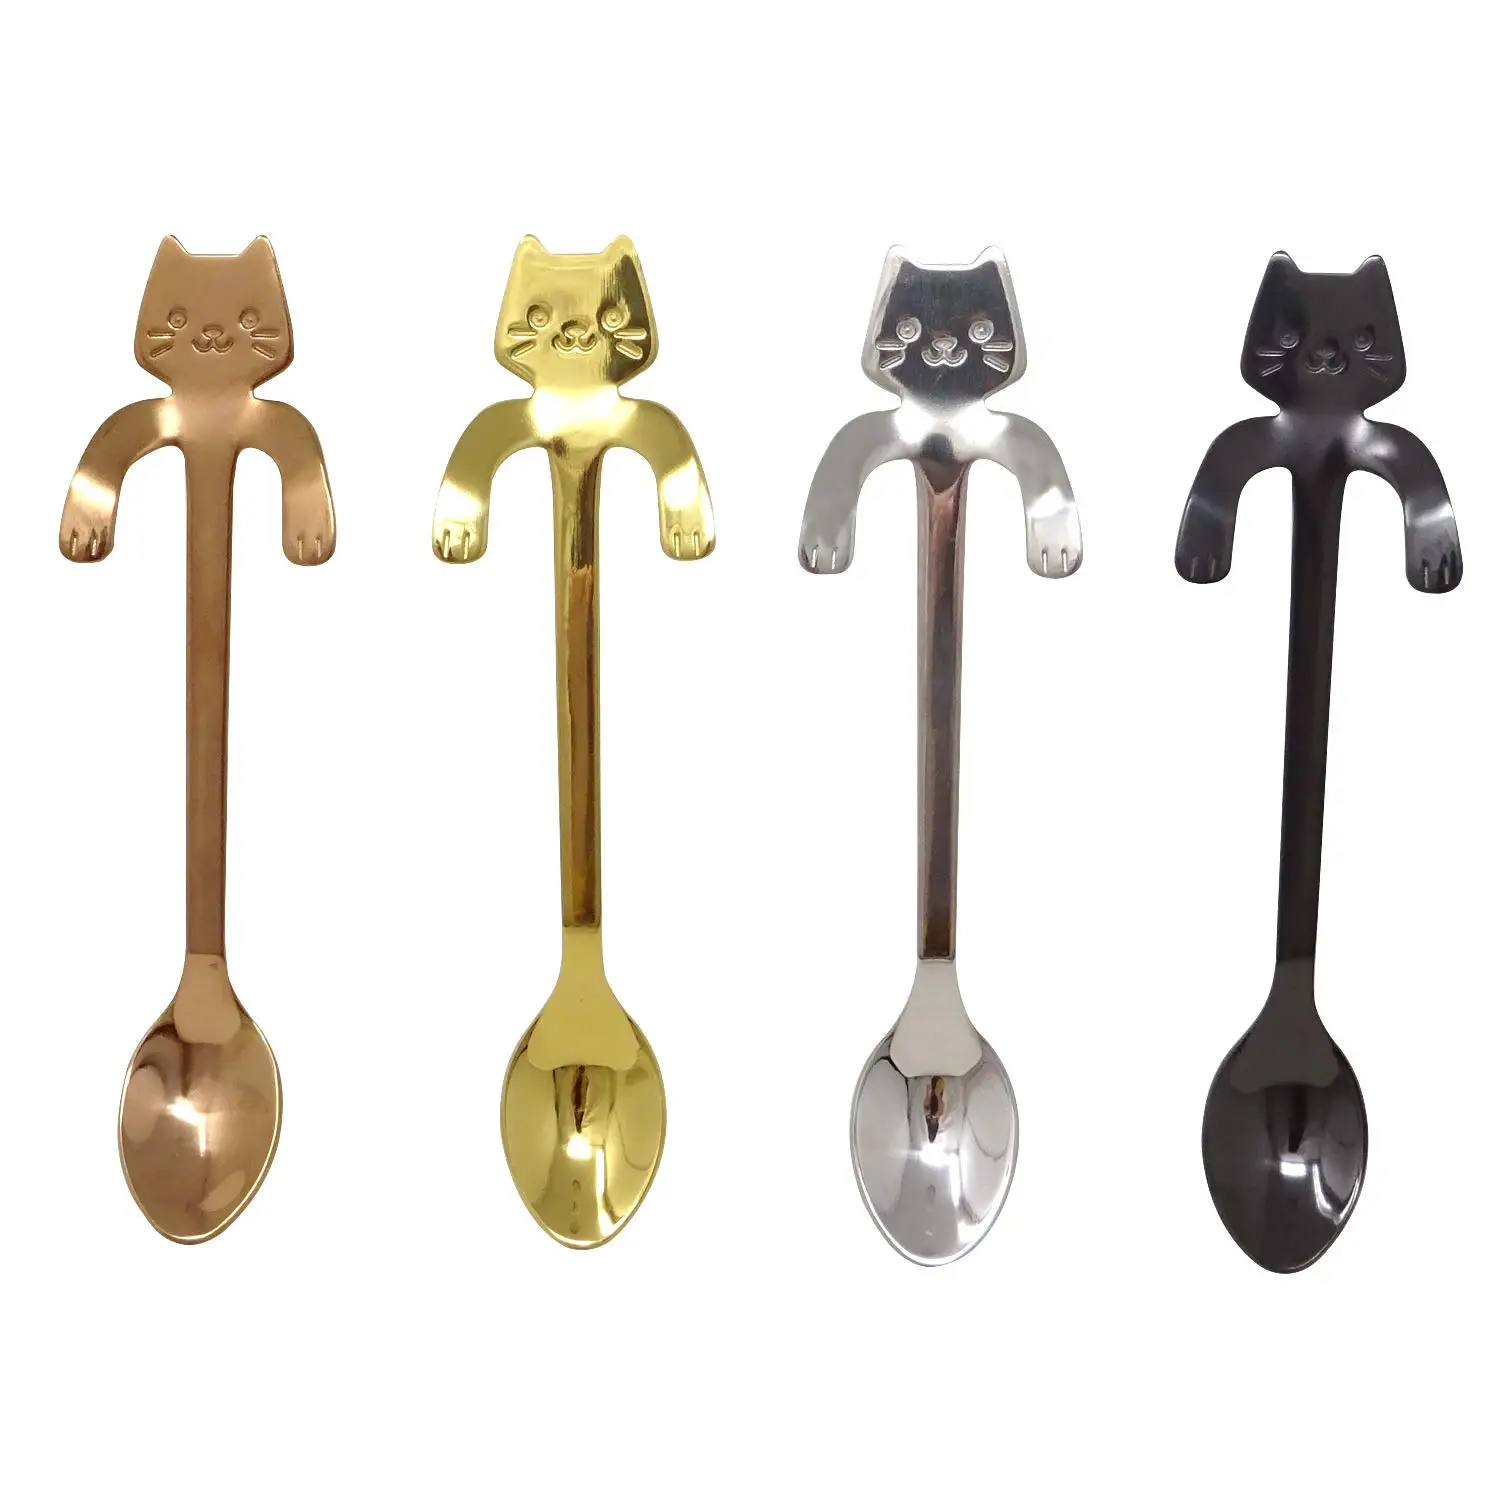 

Coffee Spoon Cute Cat Spoon Long Hanging Spoon for Dessert Stirring Drink Mixing Milkshake, Silver/gold/rose gold/black/rainbow/blue/purple